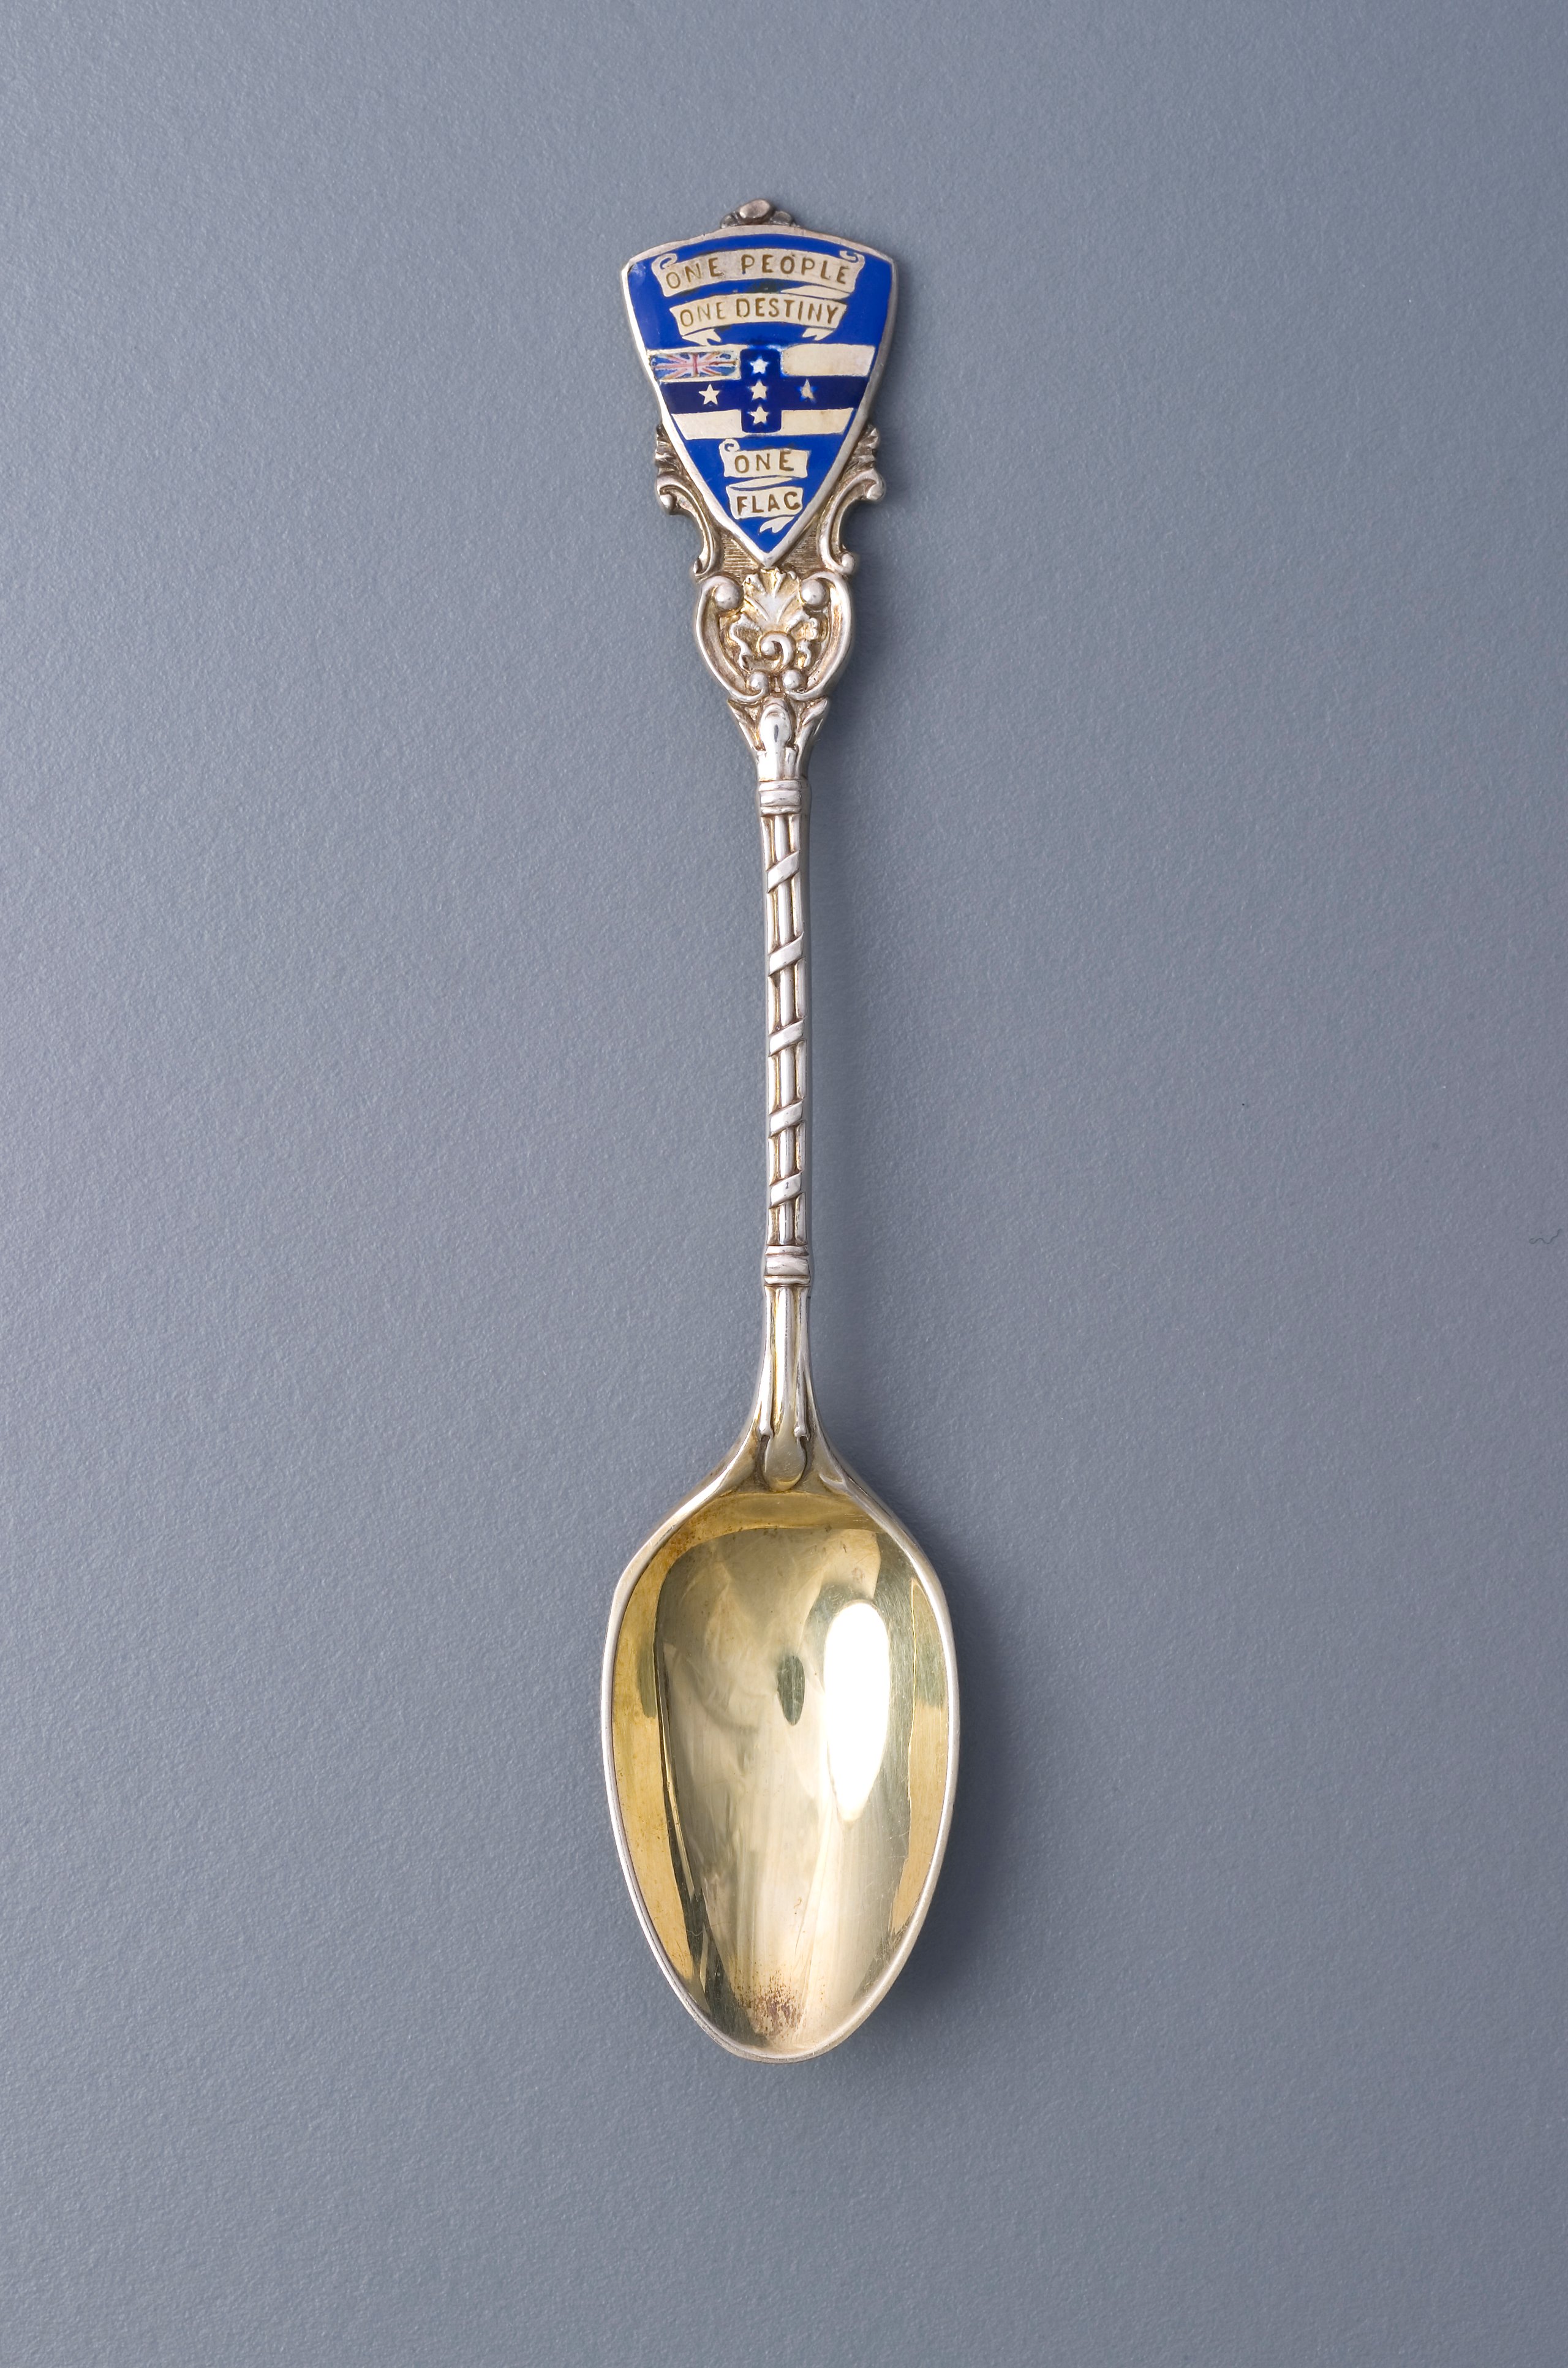 Commemorative spoon, Australasian Federation League